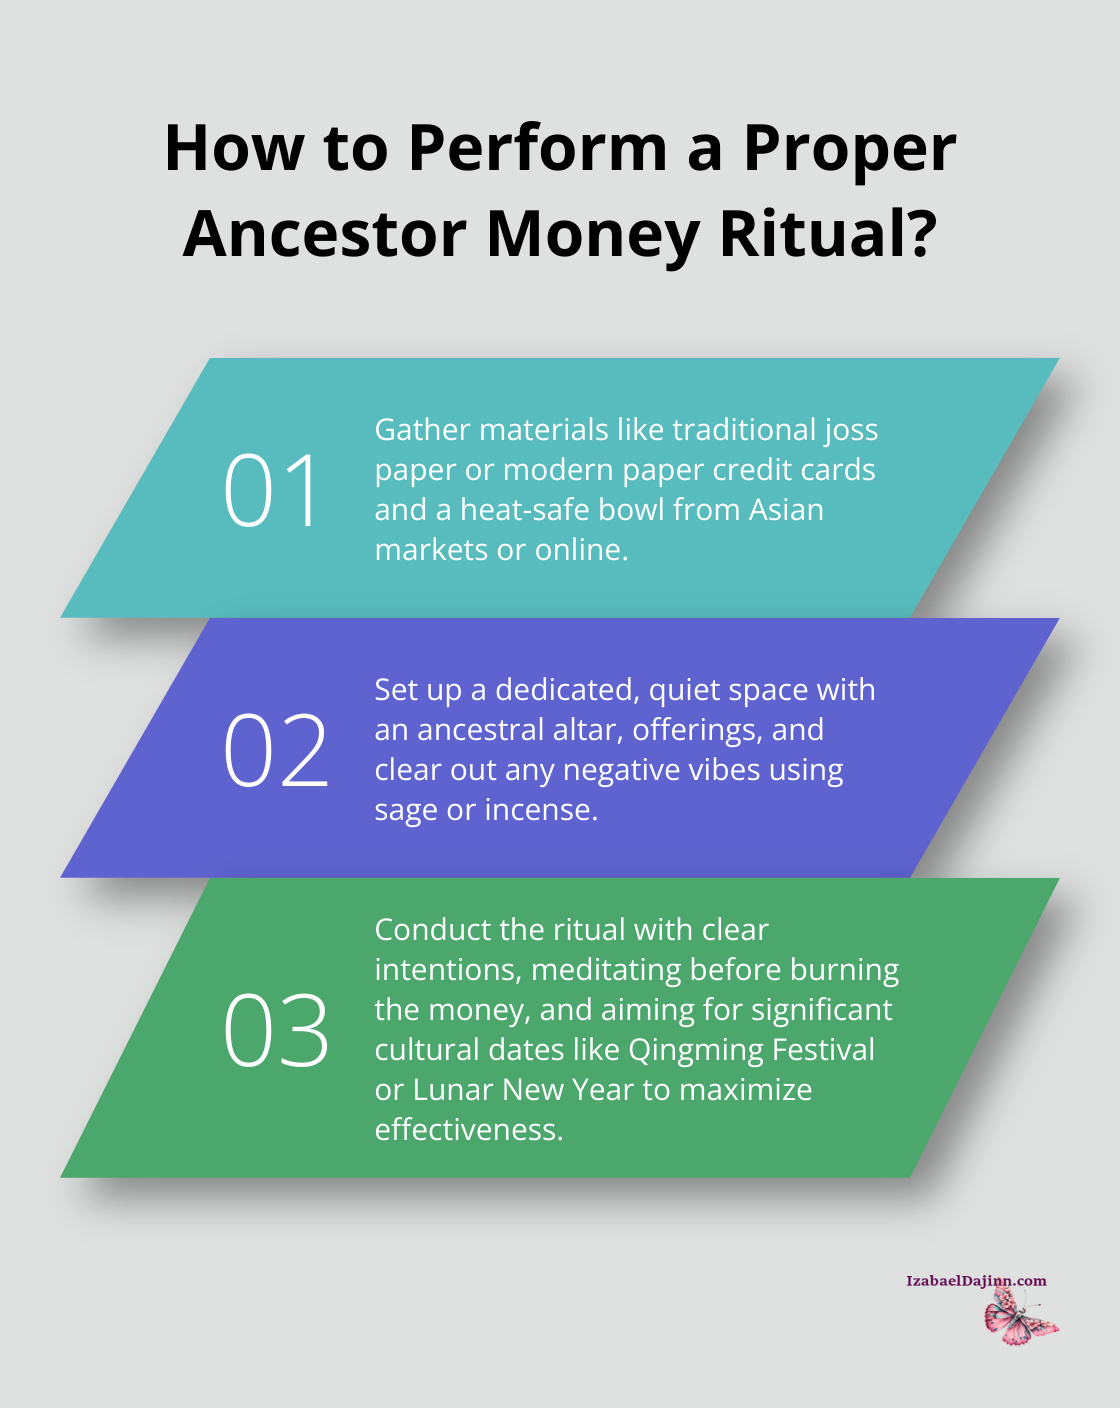 Fact - How to Perform a Proper Ancestor Money Ritual?